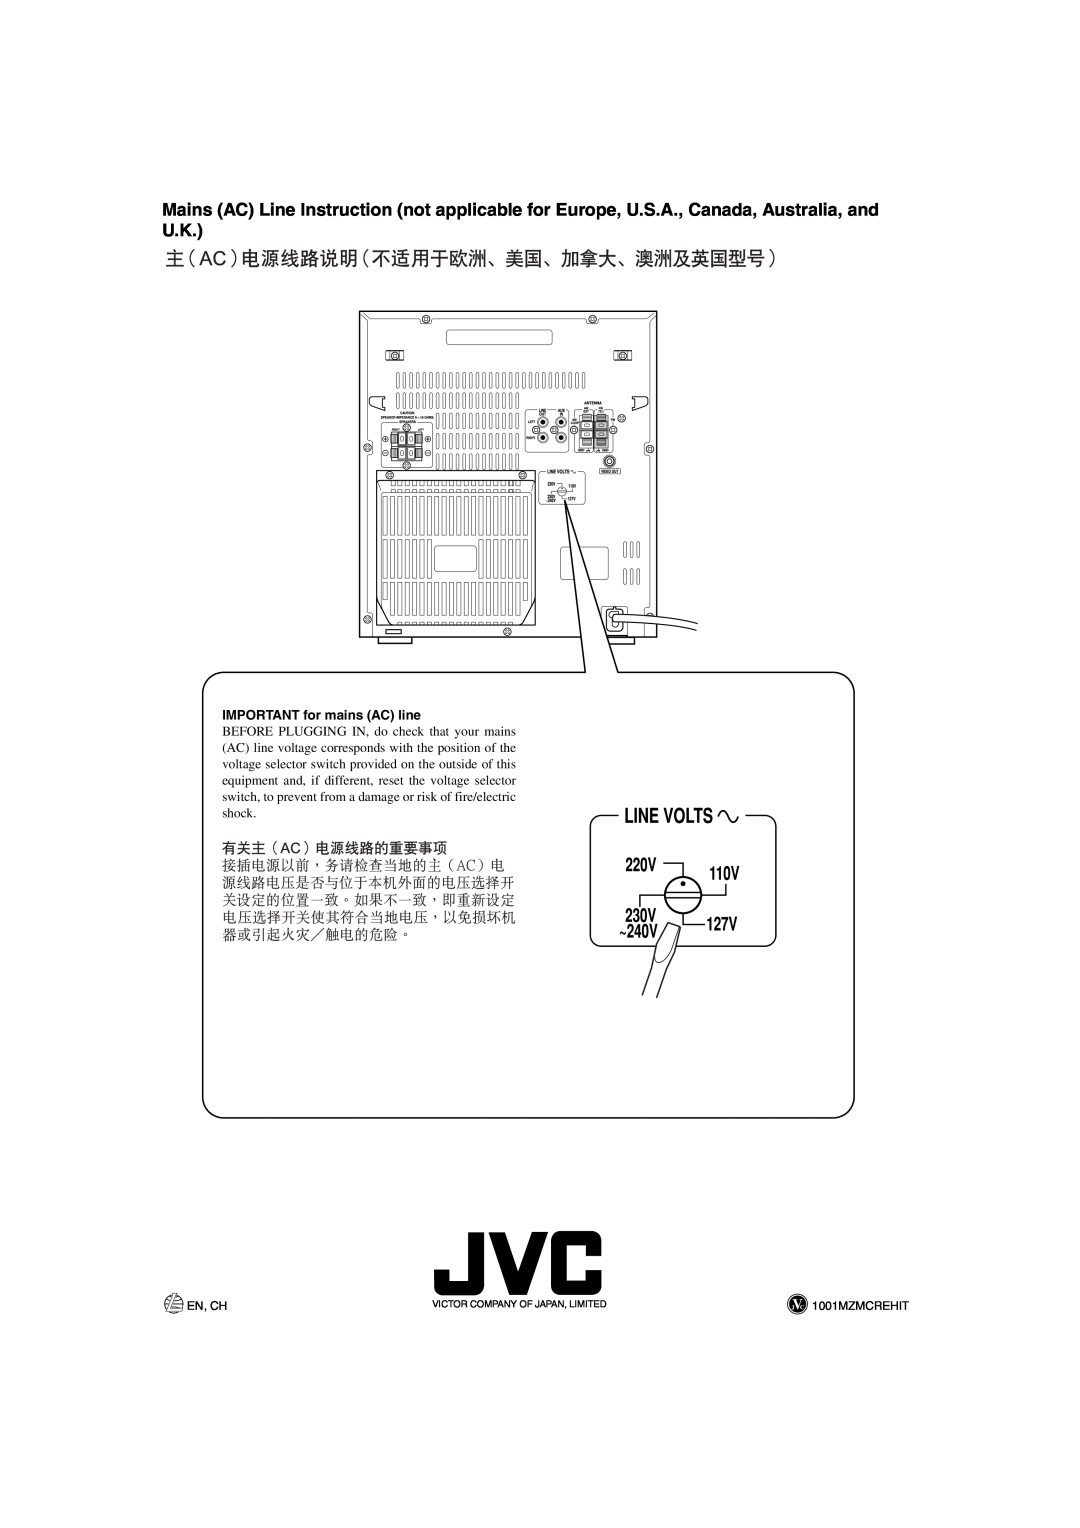 JVC MX-K35V manual IMPORTANT for mains AC line, En, Ch, 1001MZMCREHIT 